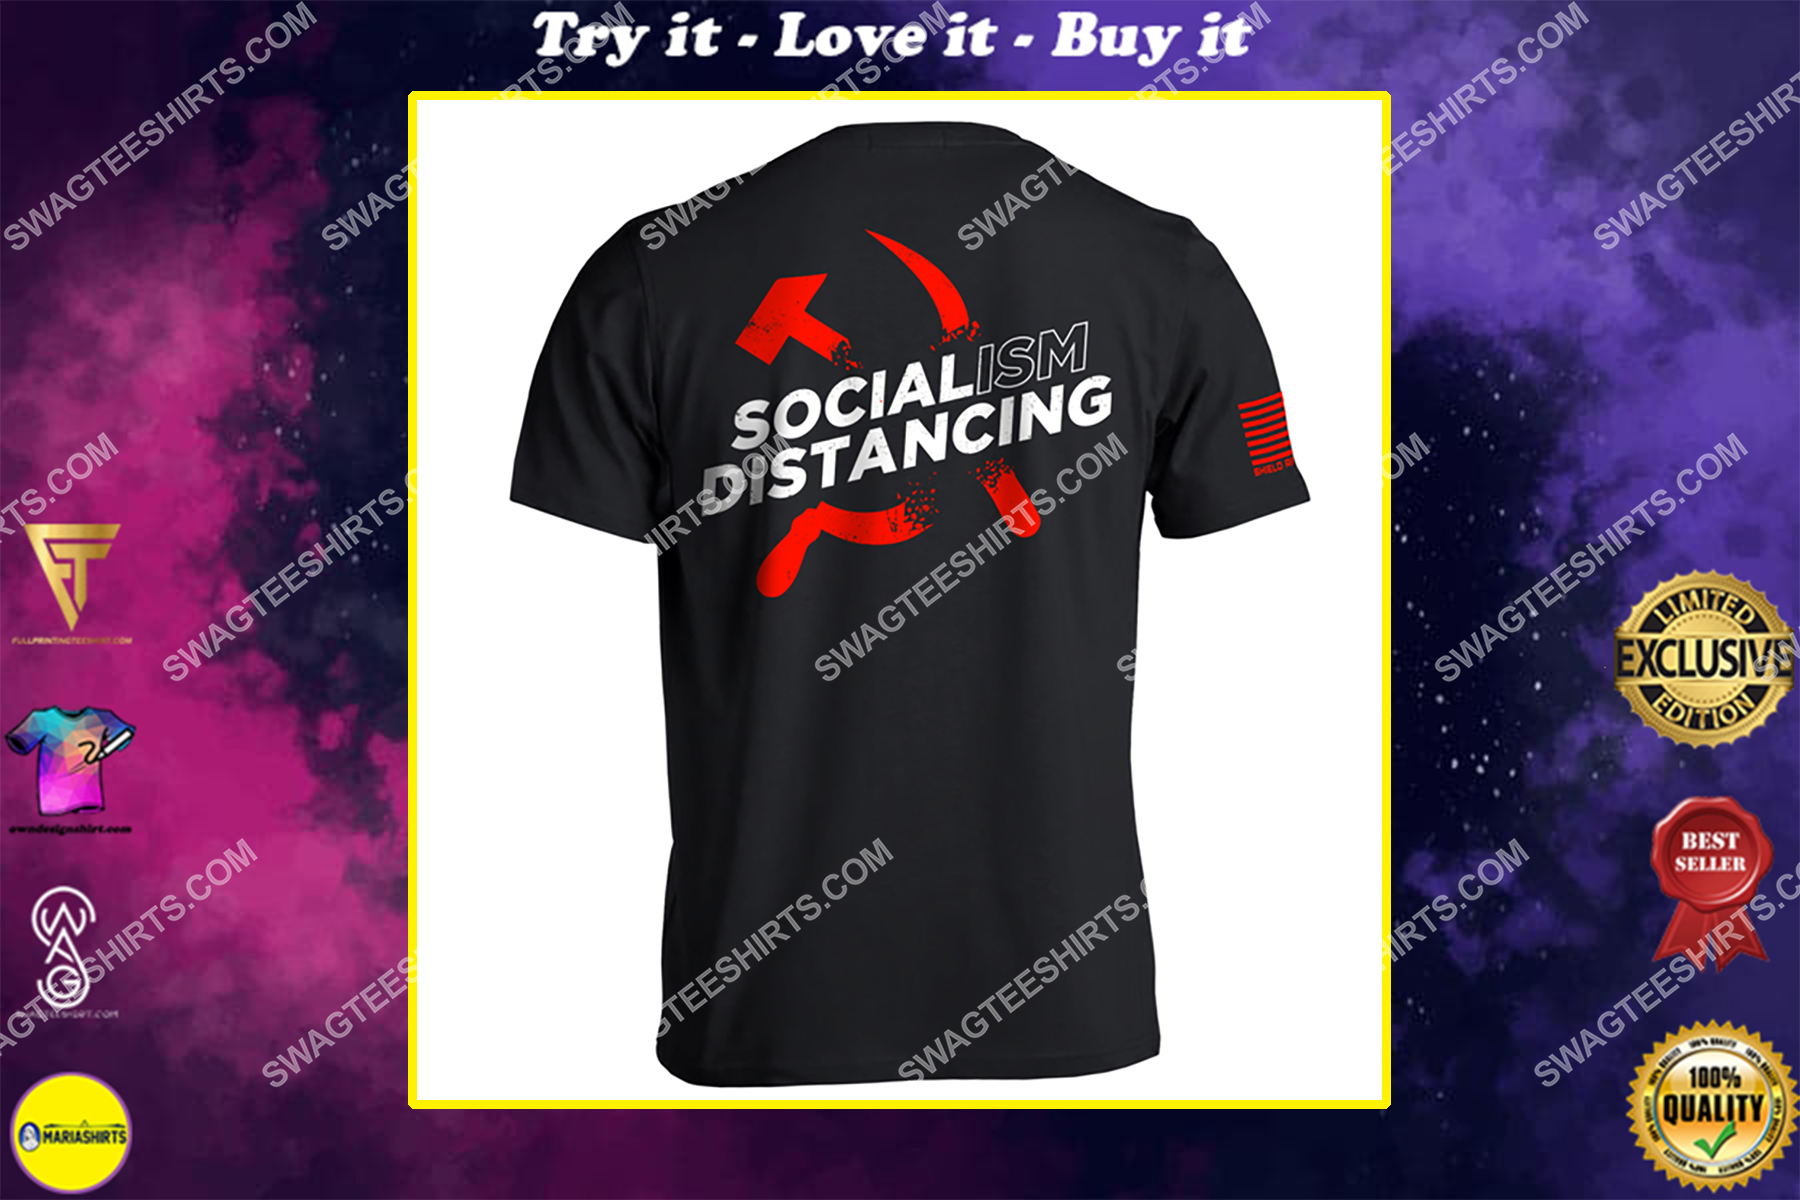 socialism distancing anti socialism political full print shirt